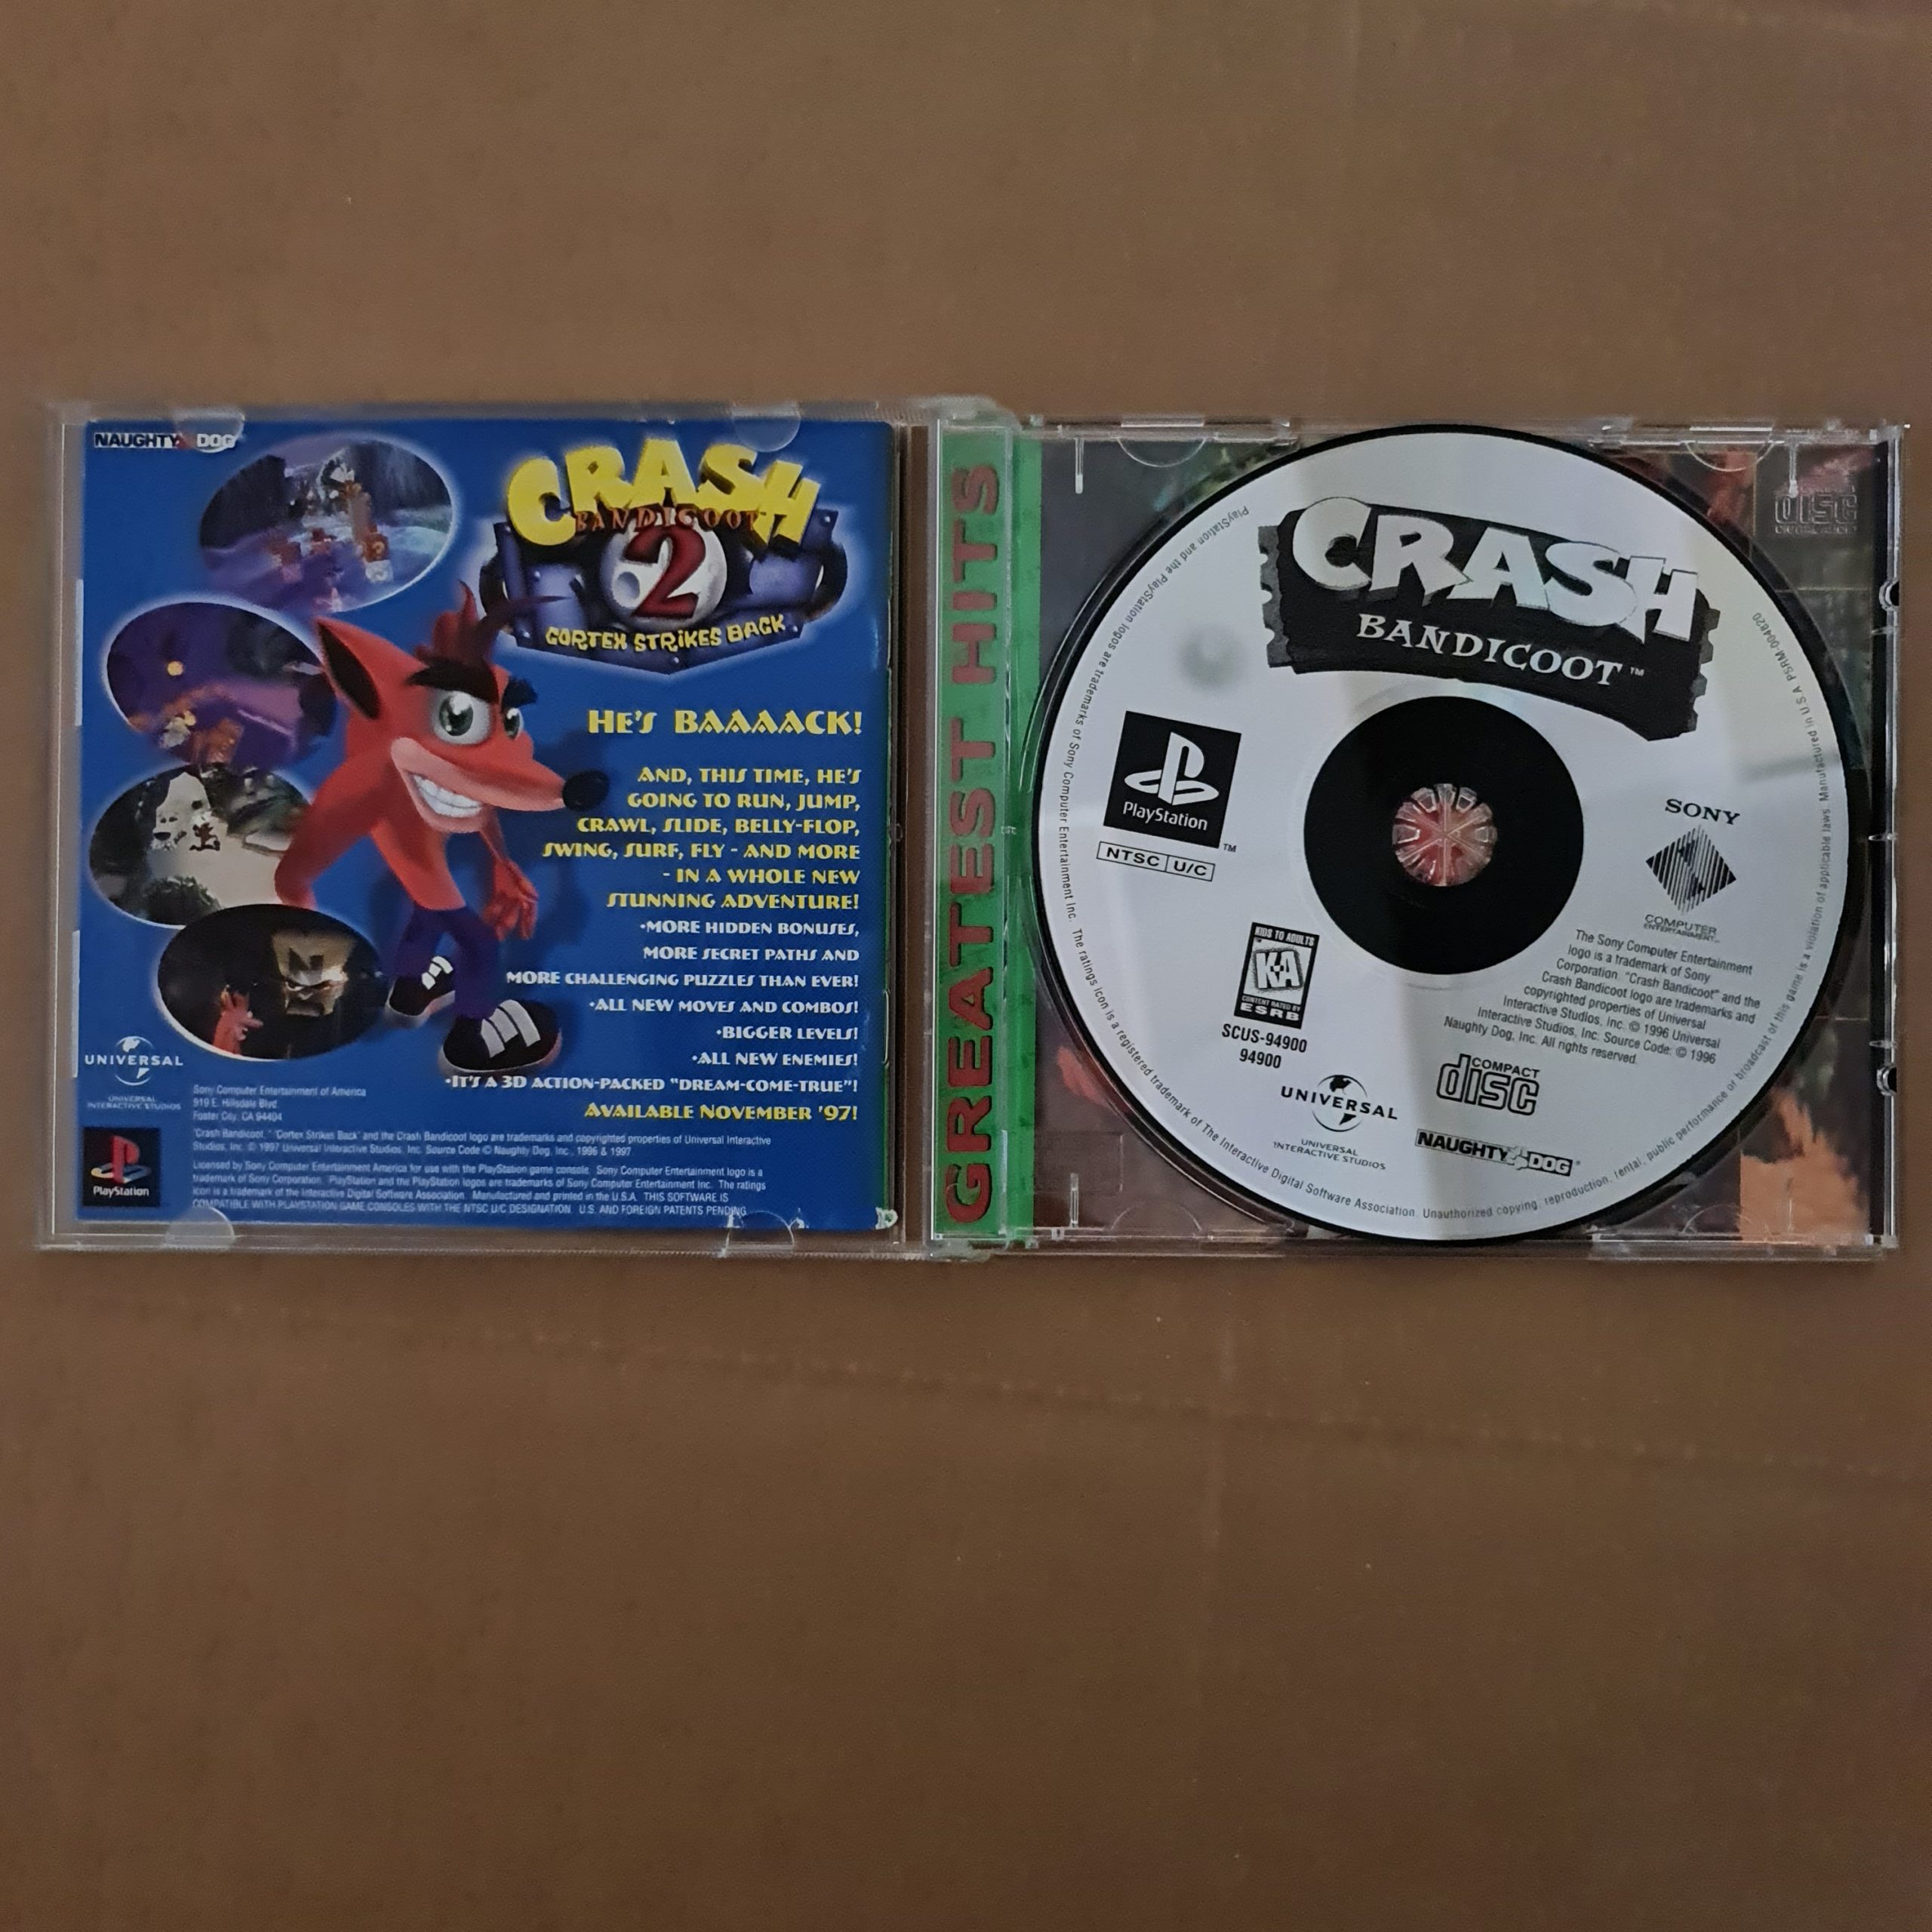 Crash Bandiccot (PS1 Greatest Hits)